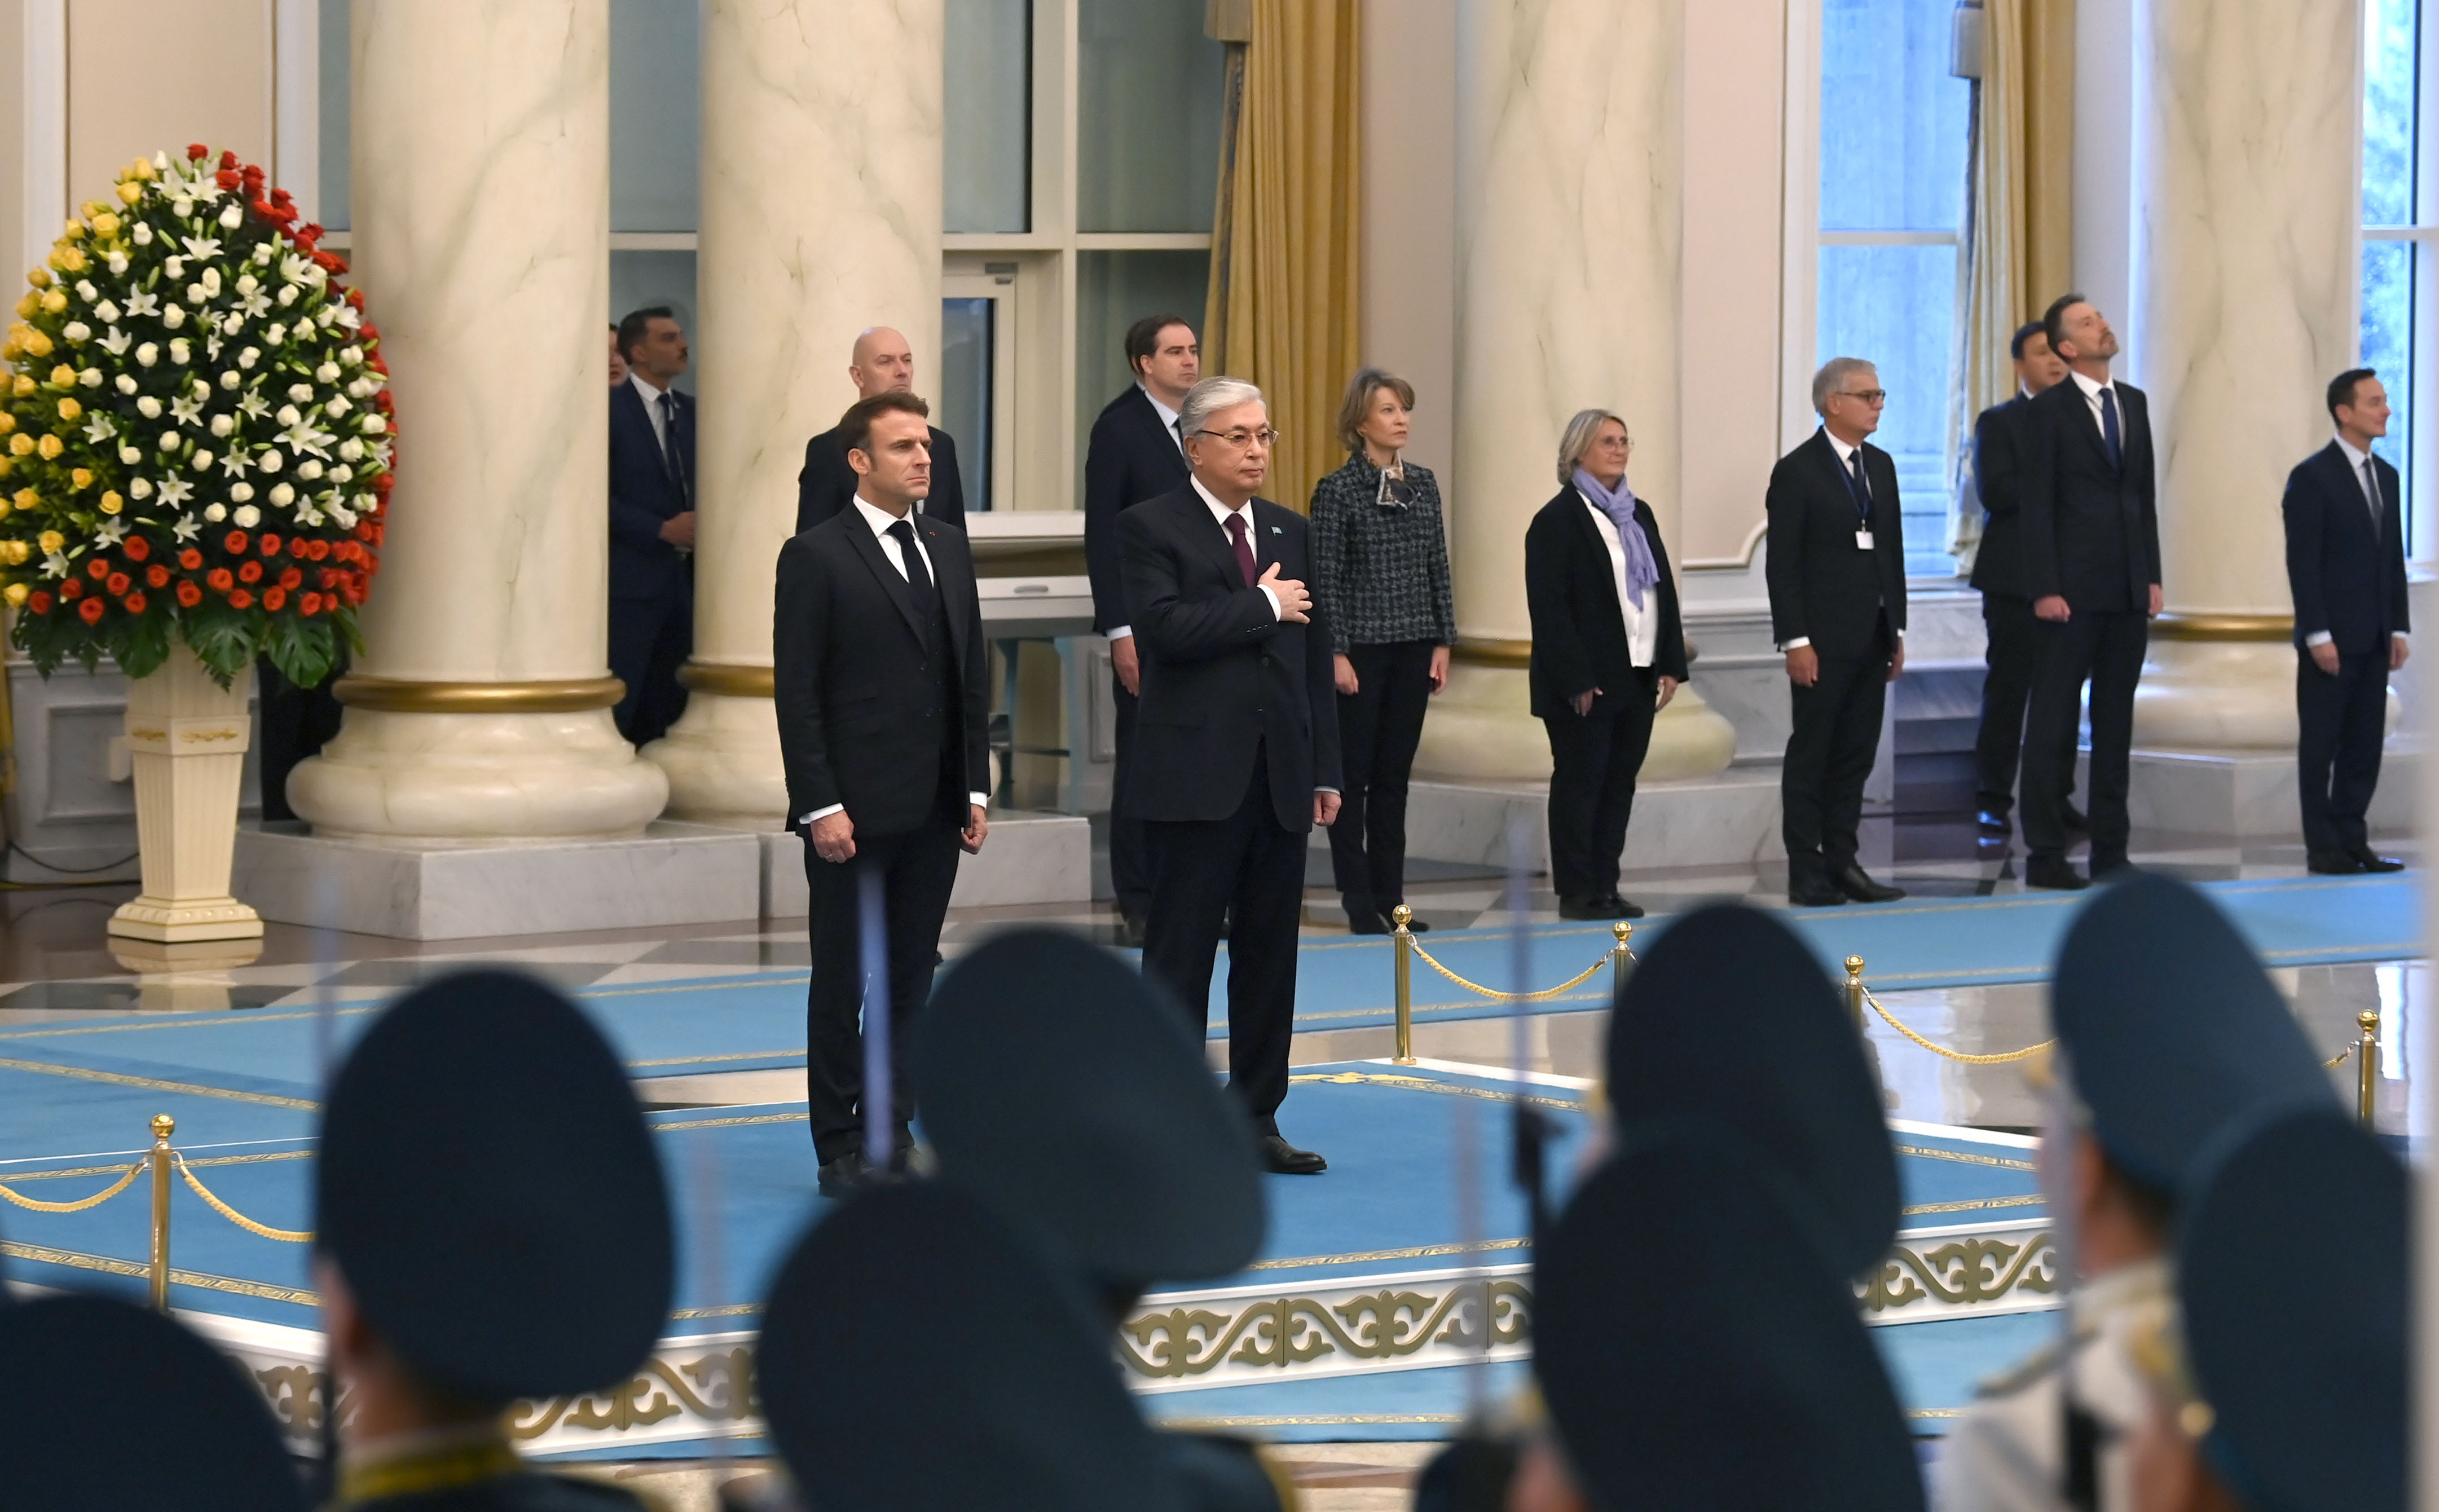 Presidents of Kazakhstan and France elevate strategic partnership through high-level bilateral talks 